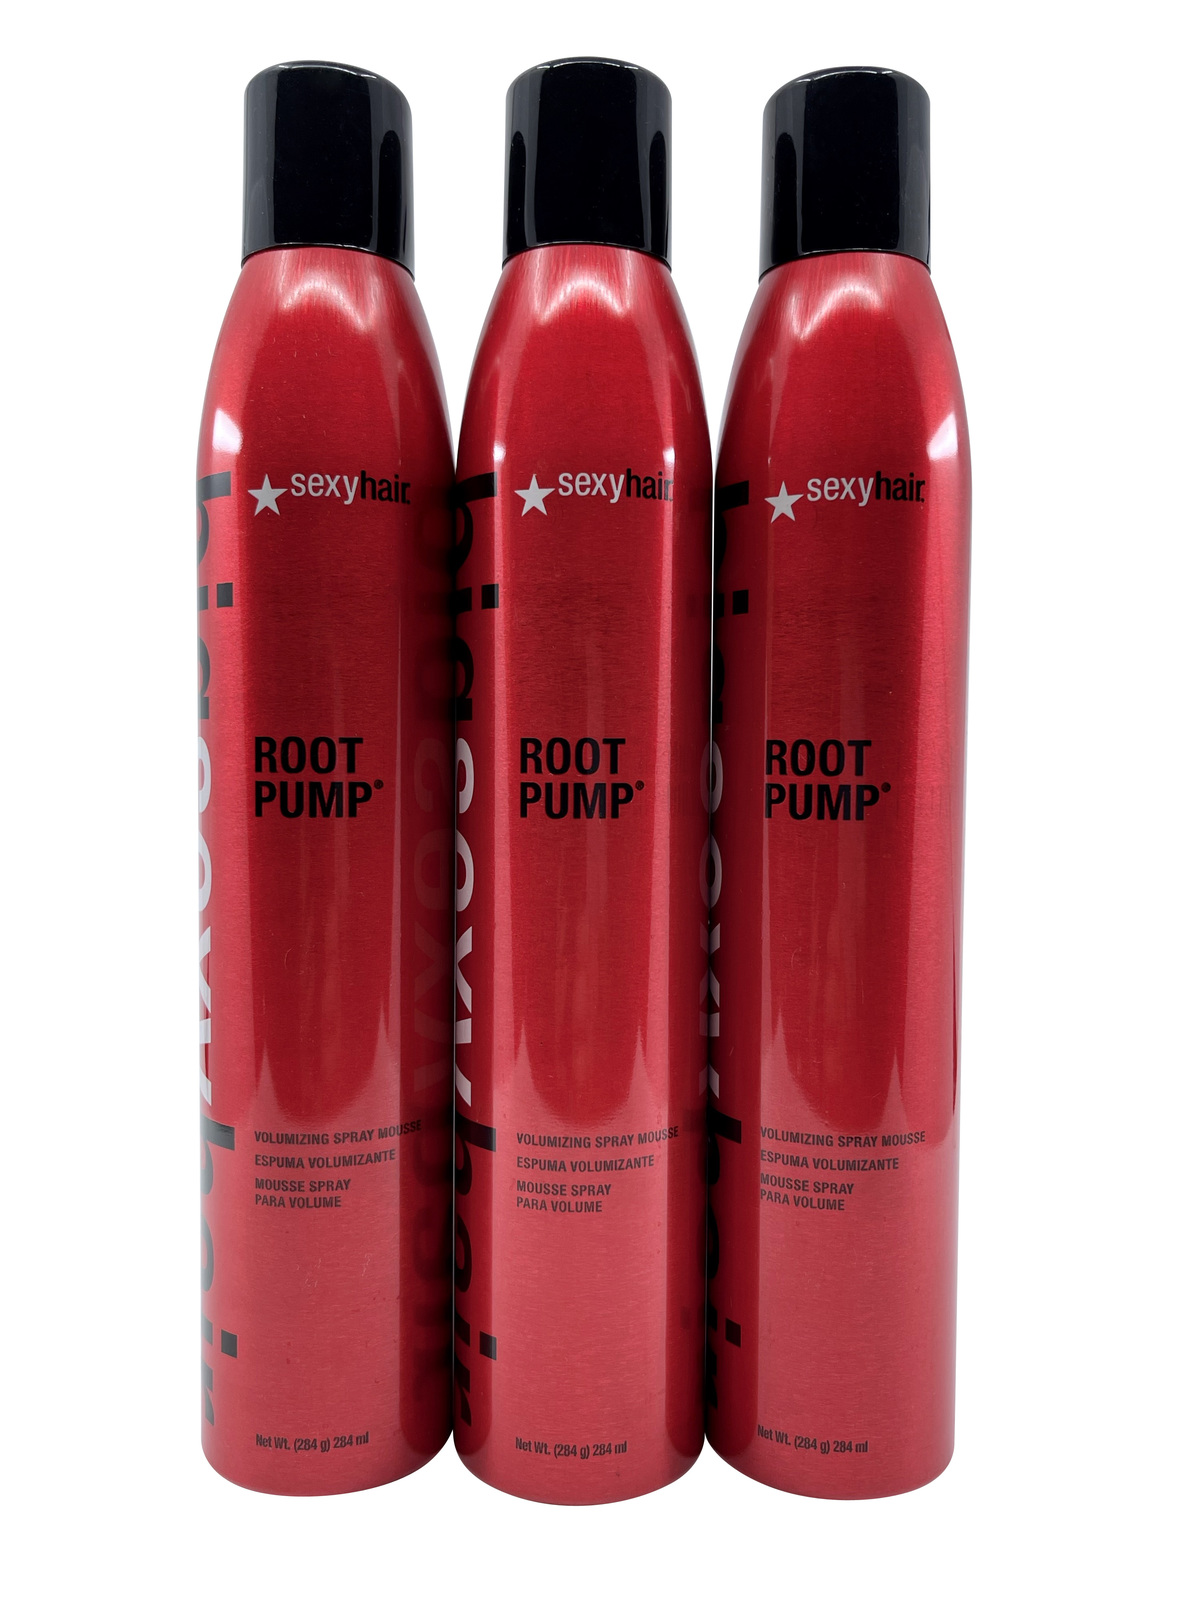 Sexy Hair Root Pump 9.6 oz. Set of 3 - $29.99